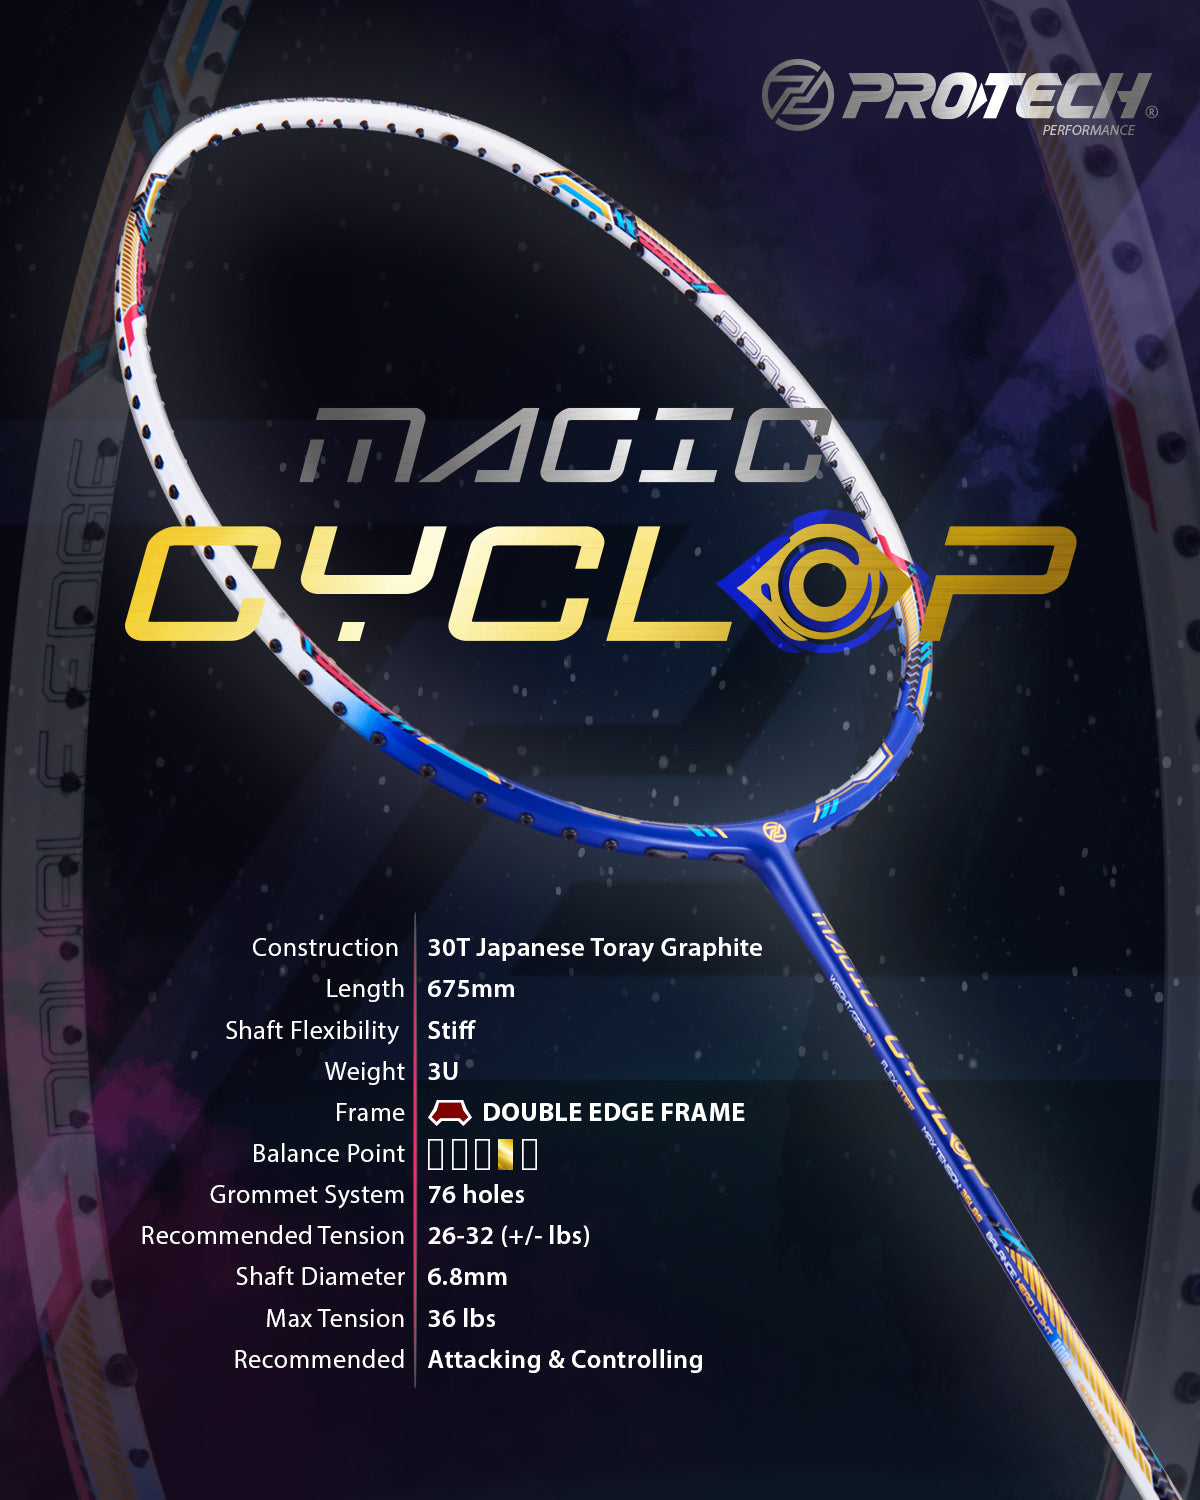 PROTECH RACQUET MAGIC CYCLOP | 3UG2 | MAX 36 LBS